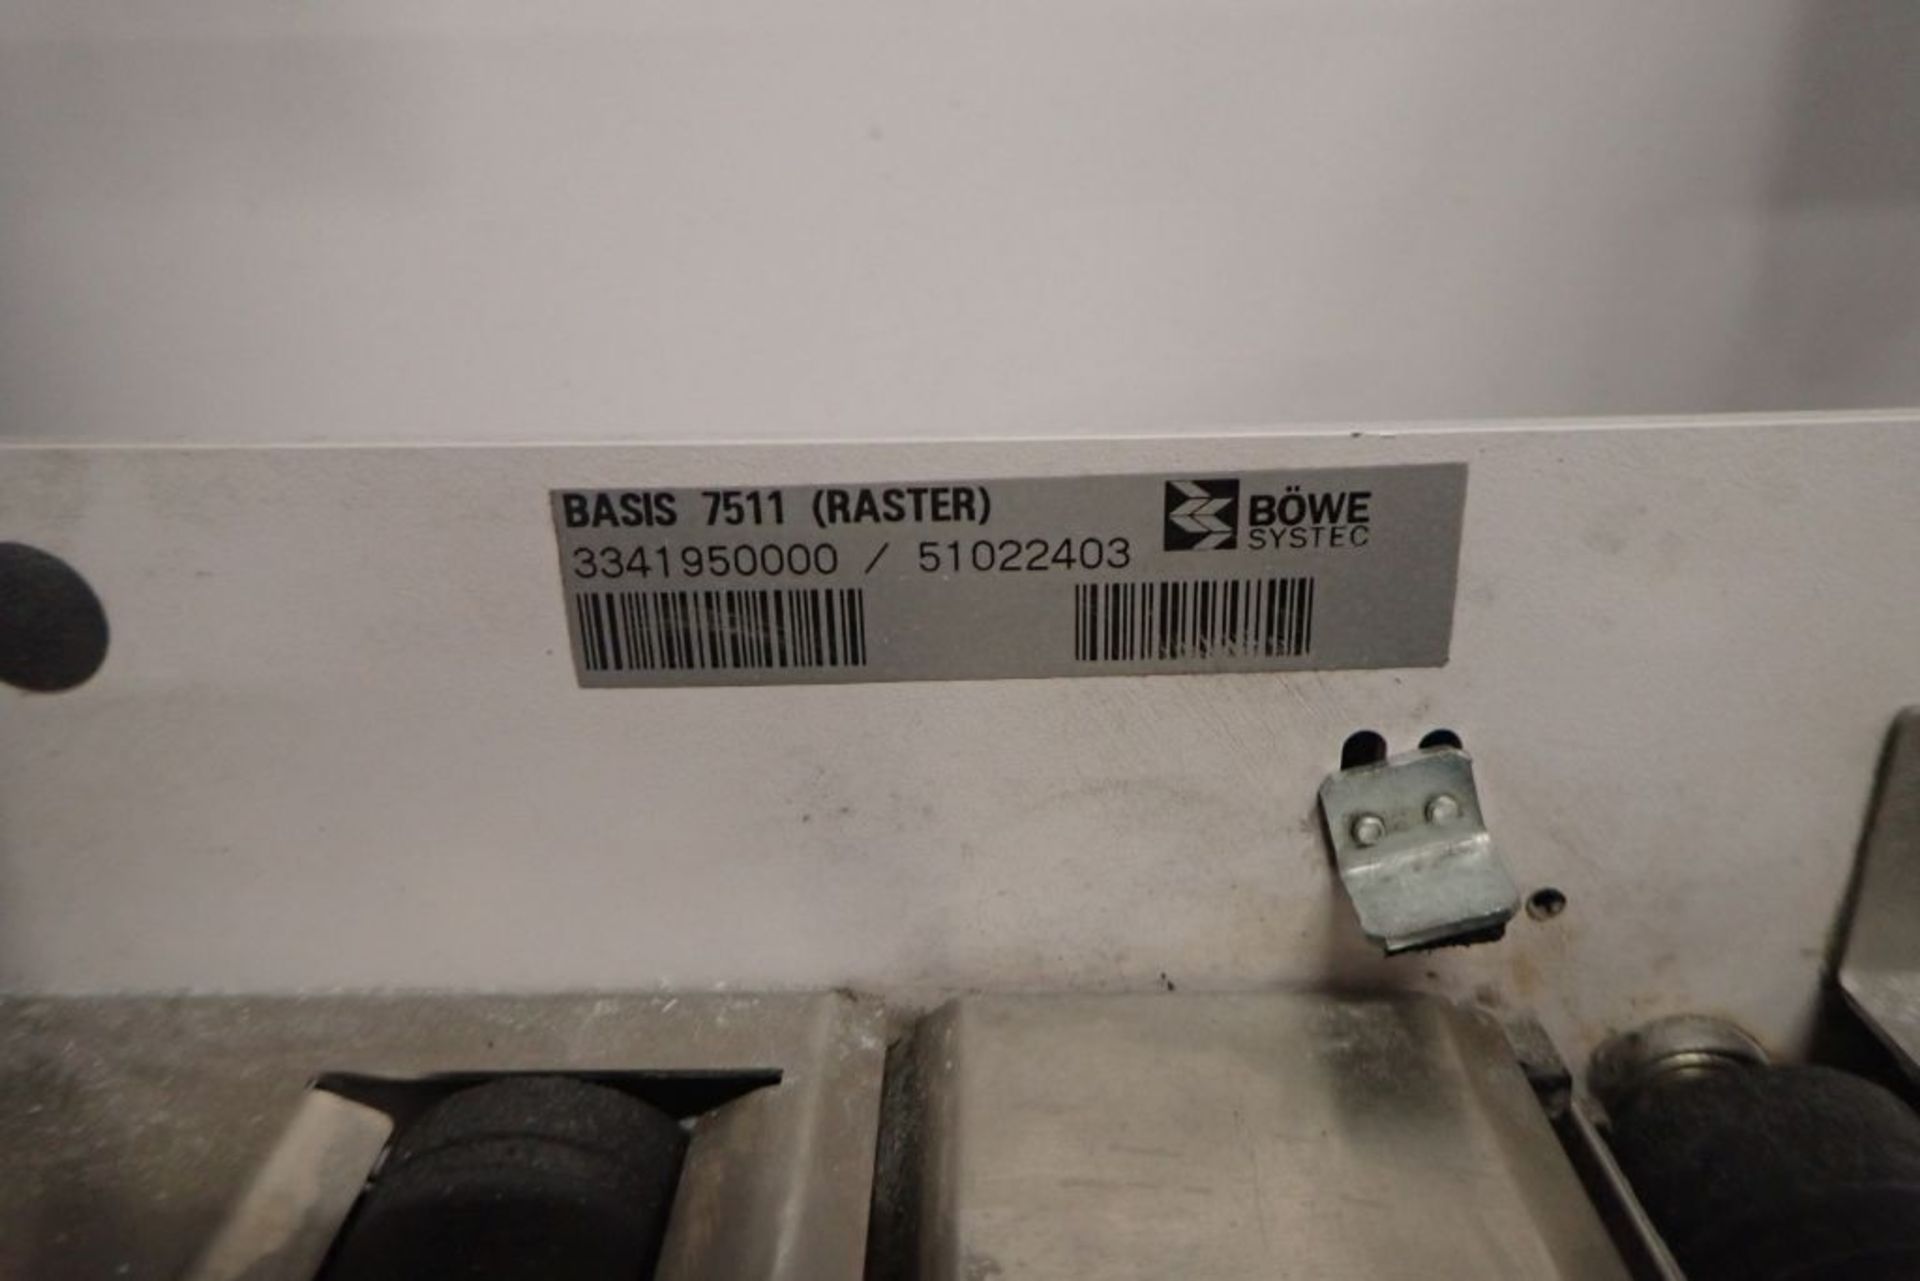 Bowe Systec Turbo Premium Automatic Mailing System - Bild 272 aus 297